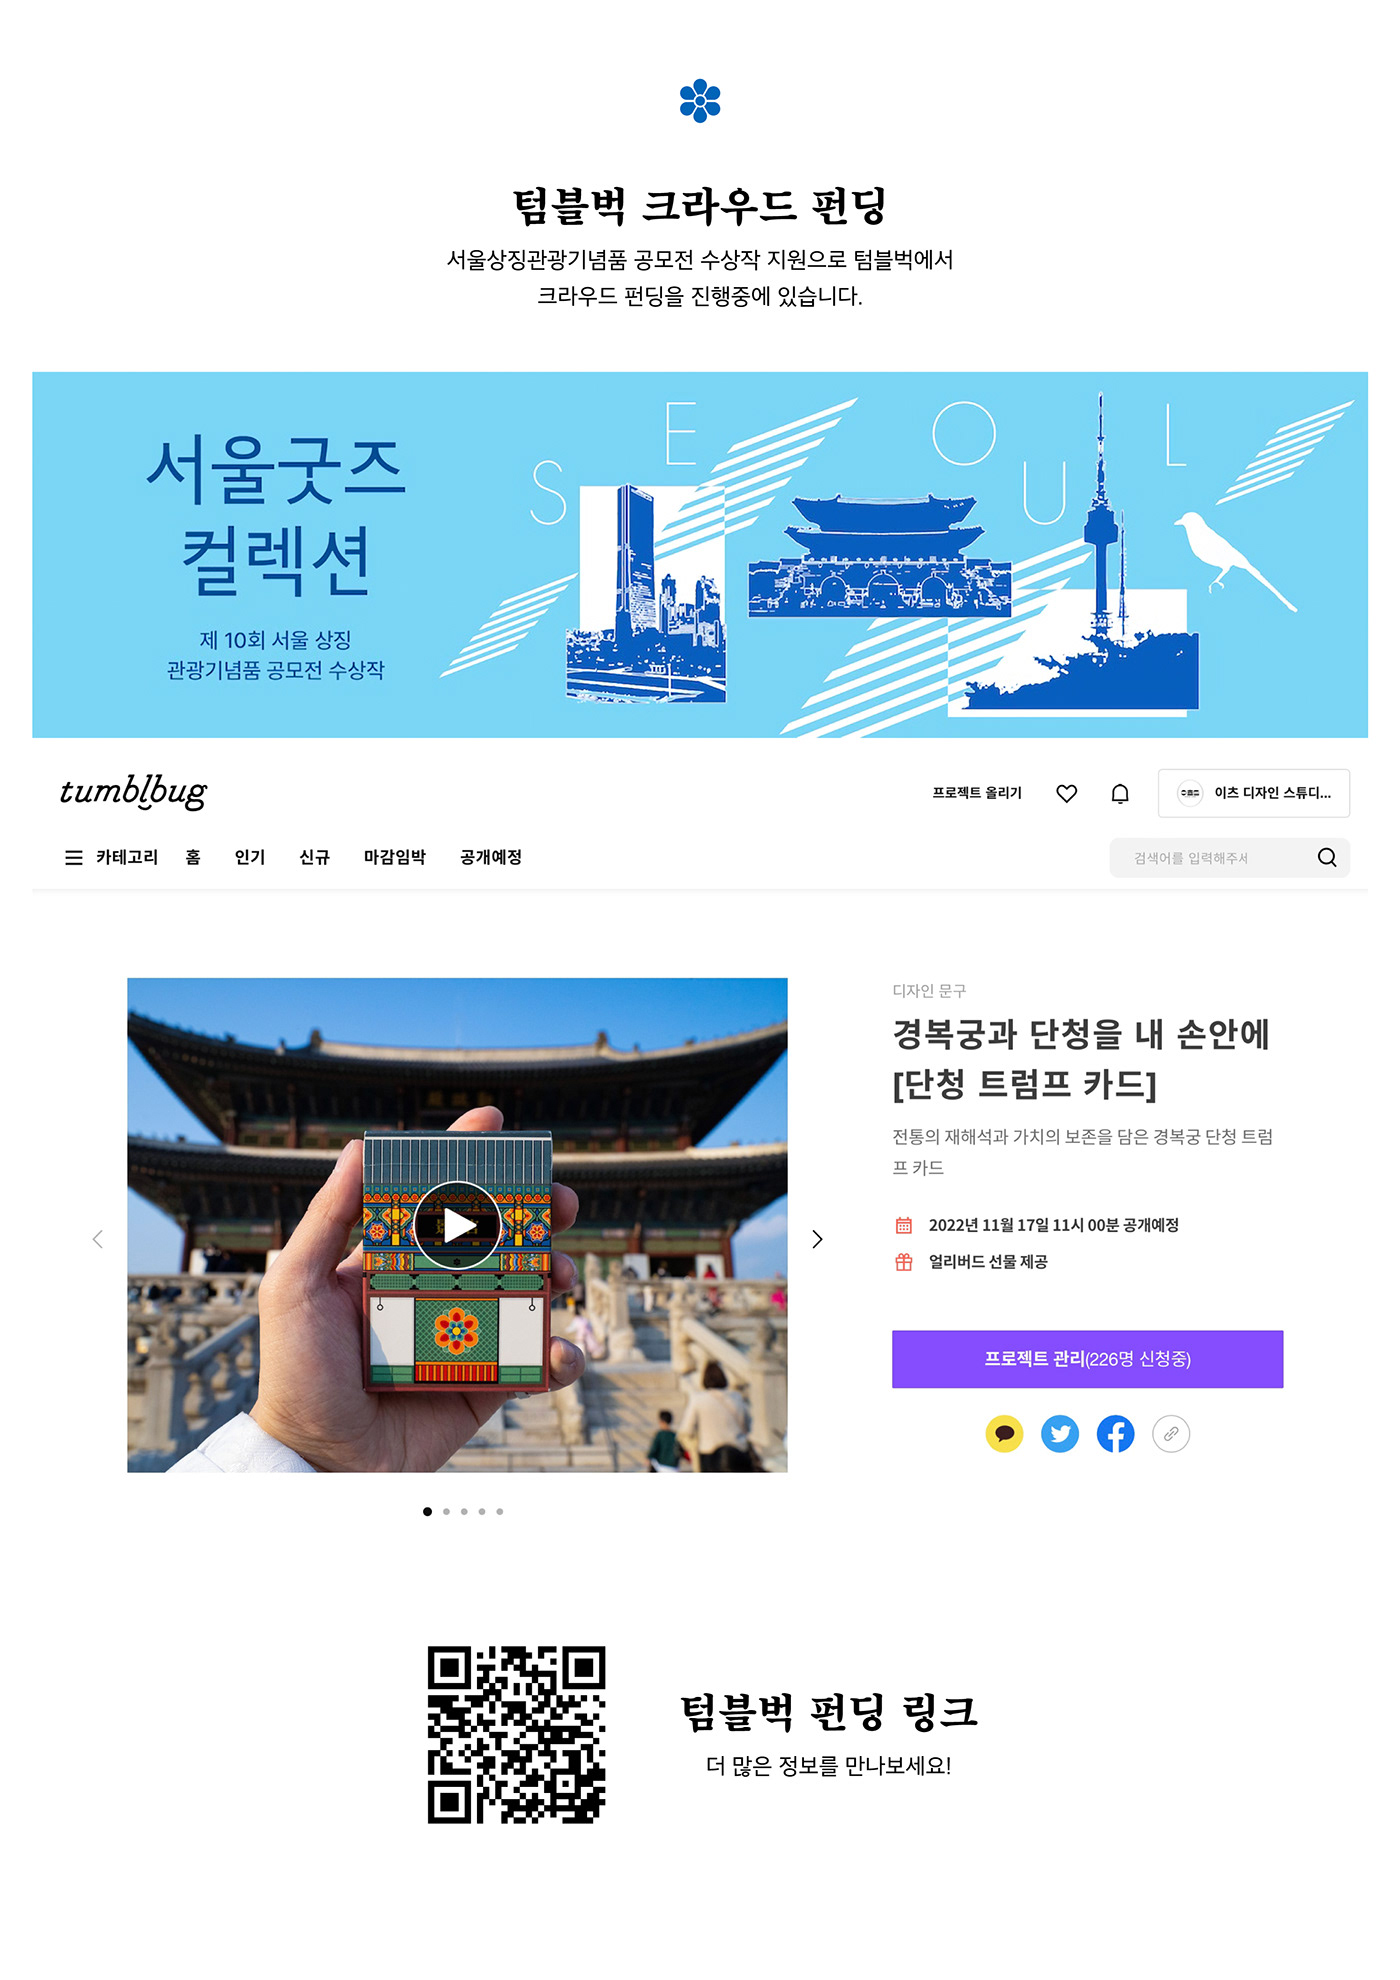 Playing Cards deck cardistry dancheong Korea 단청 seoul South Korea gyeongbokgung